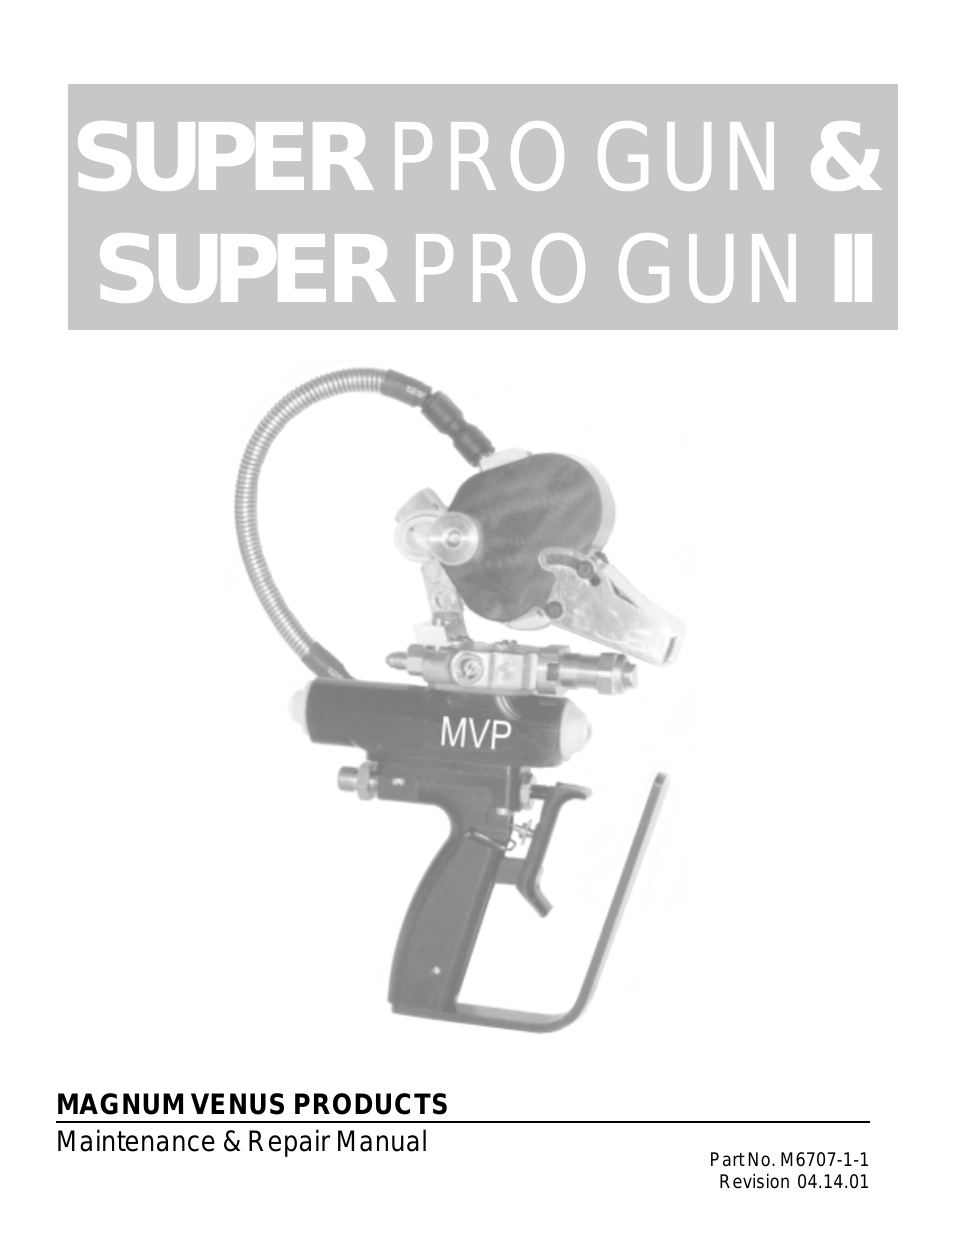 SUPER PRO GUN II